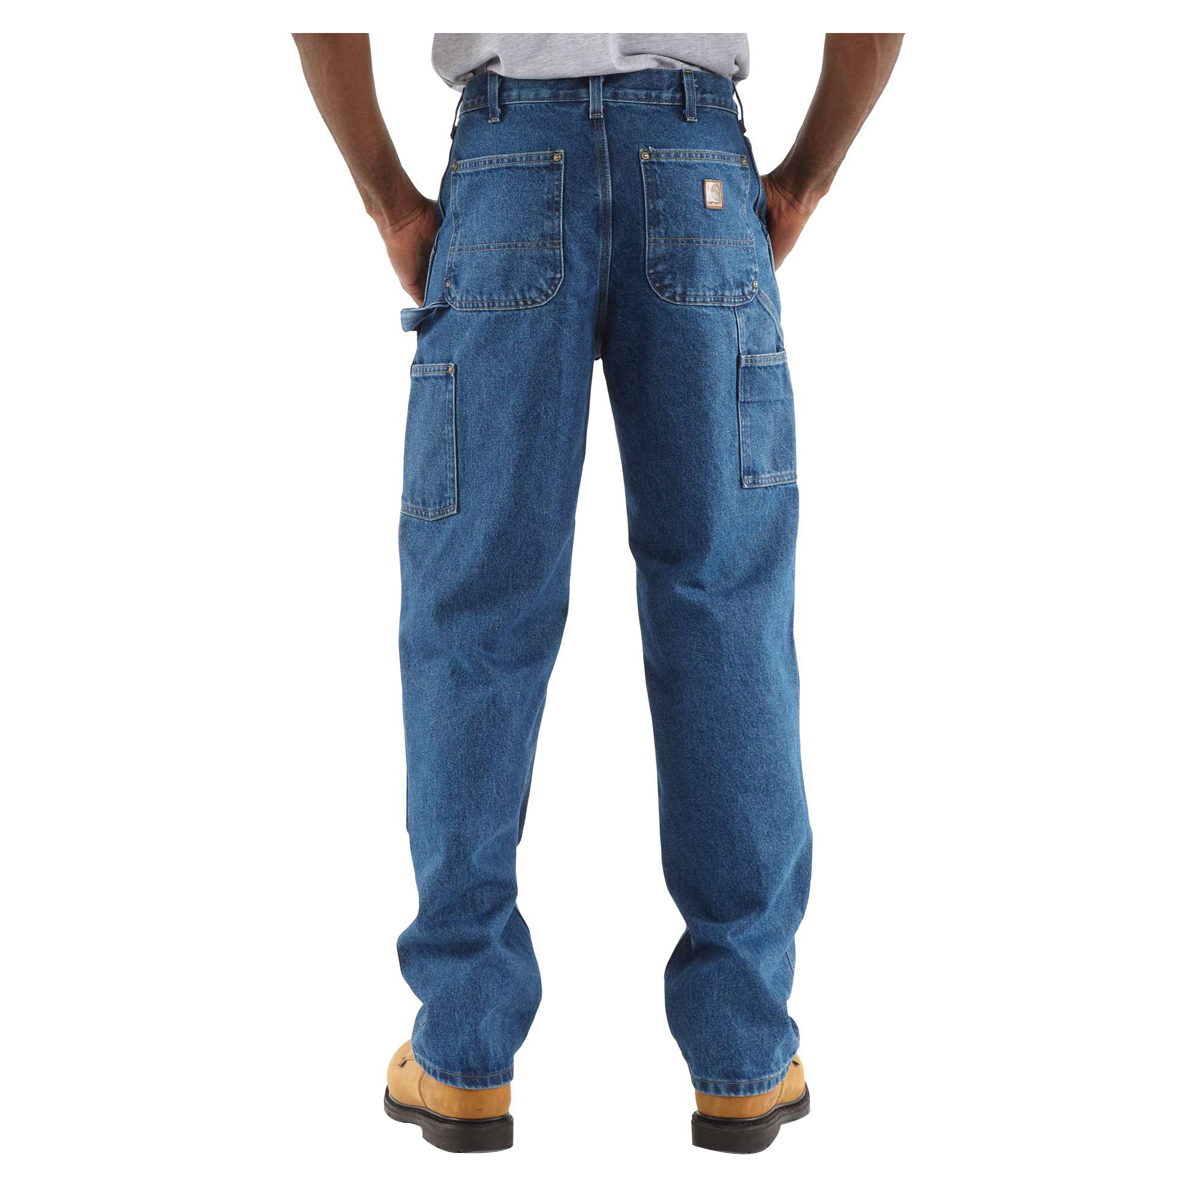 Carhartt B73-DST-33X30 Utility Logger Jeans, 33 in Waist, 30 in L Inseam, Darkstone, Loose Fit - 6